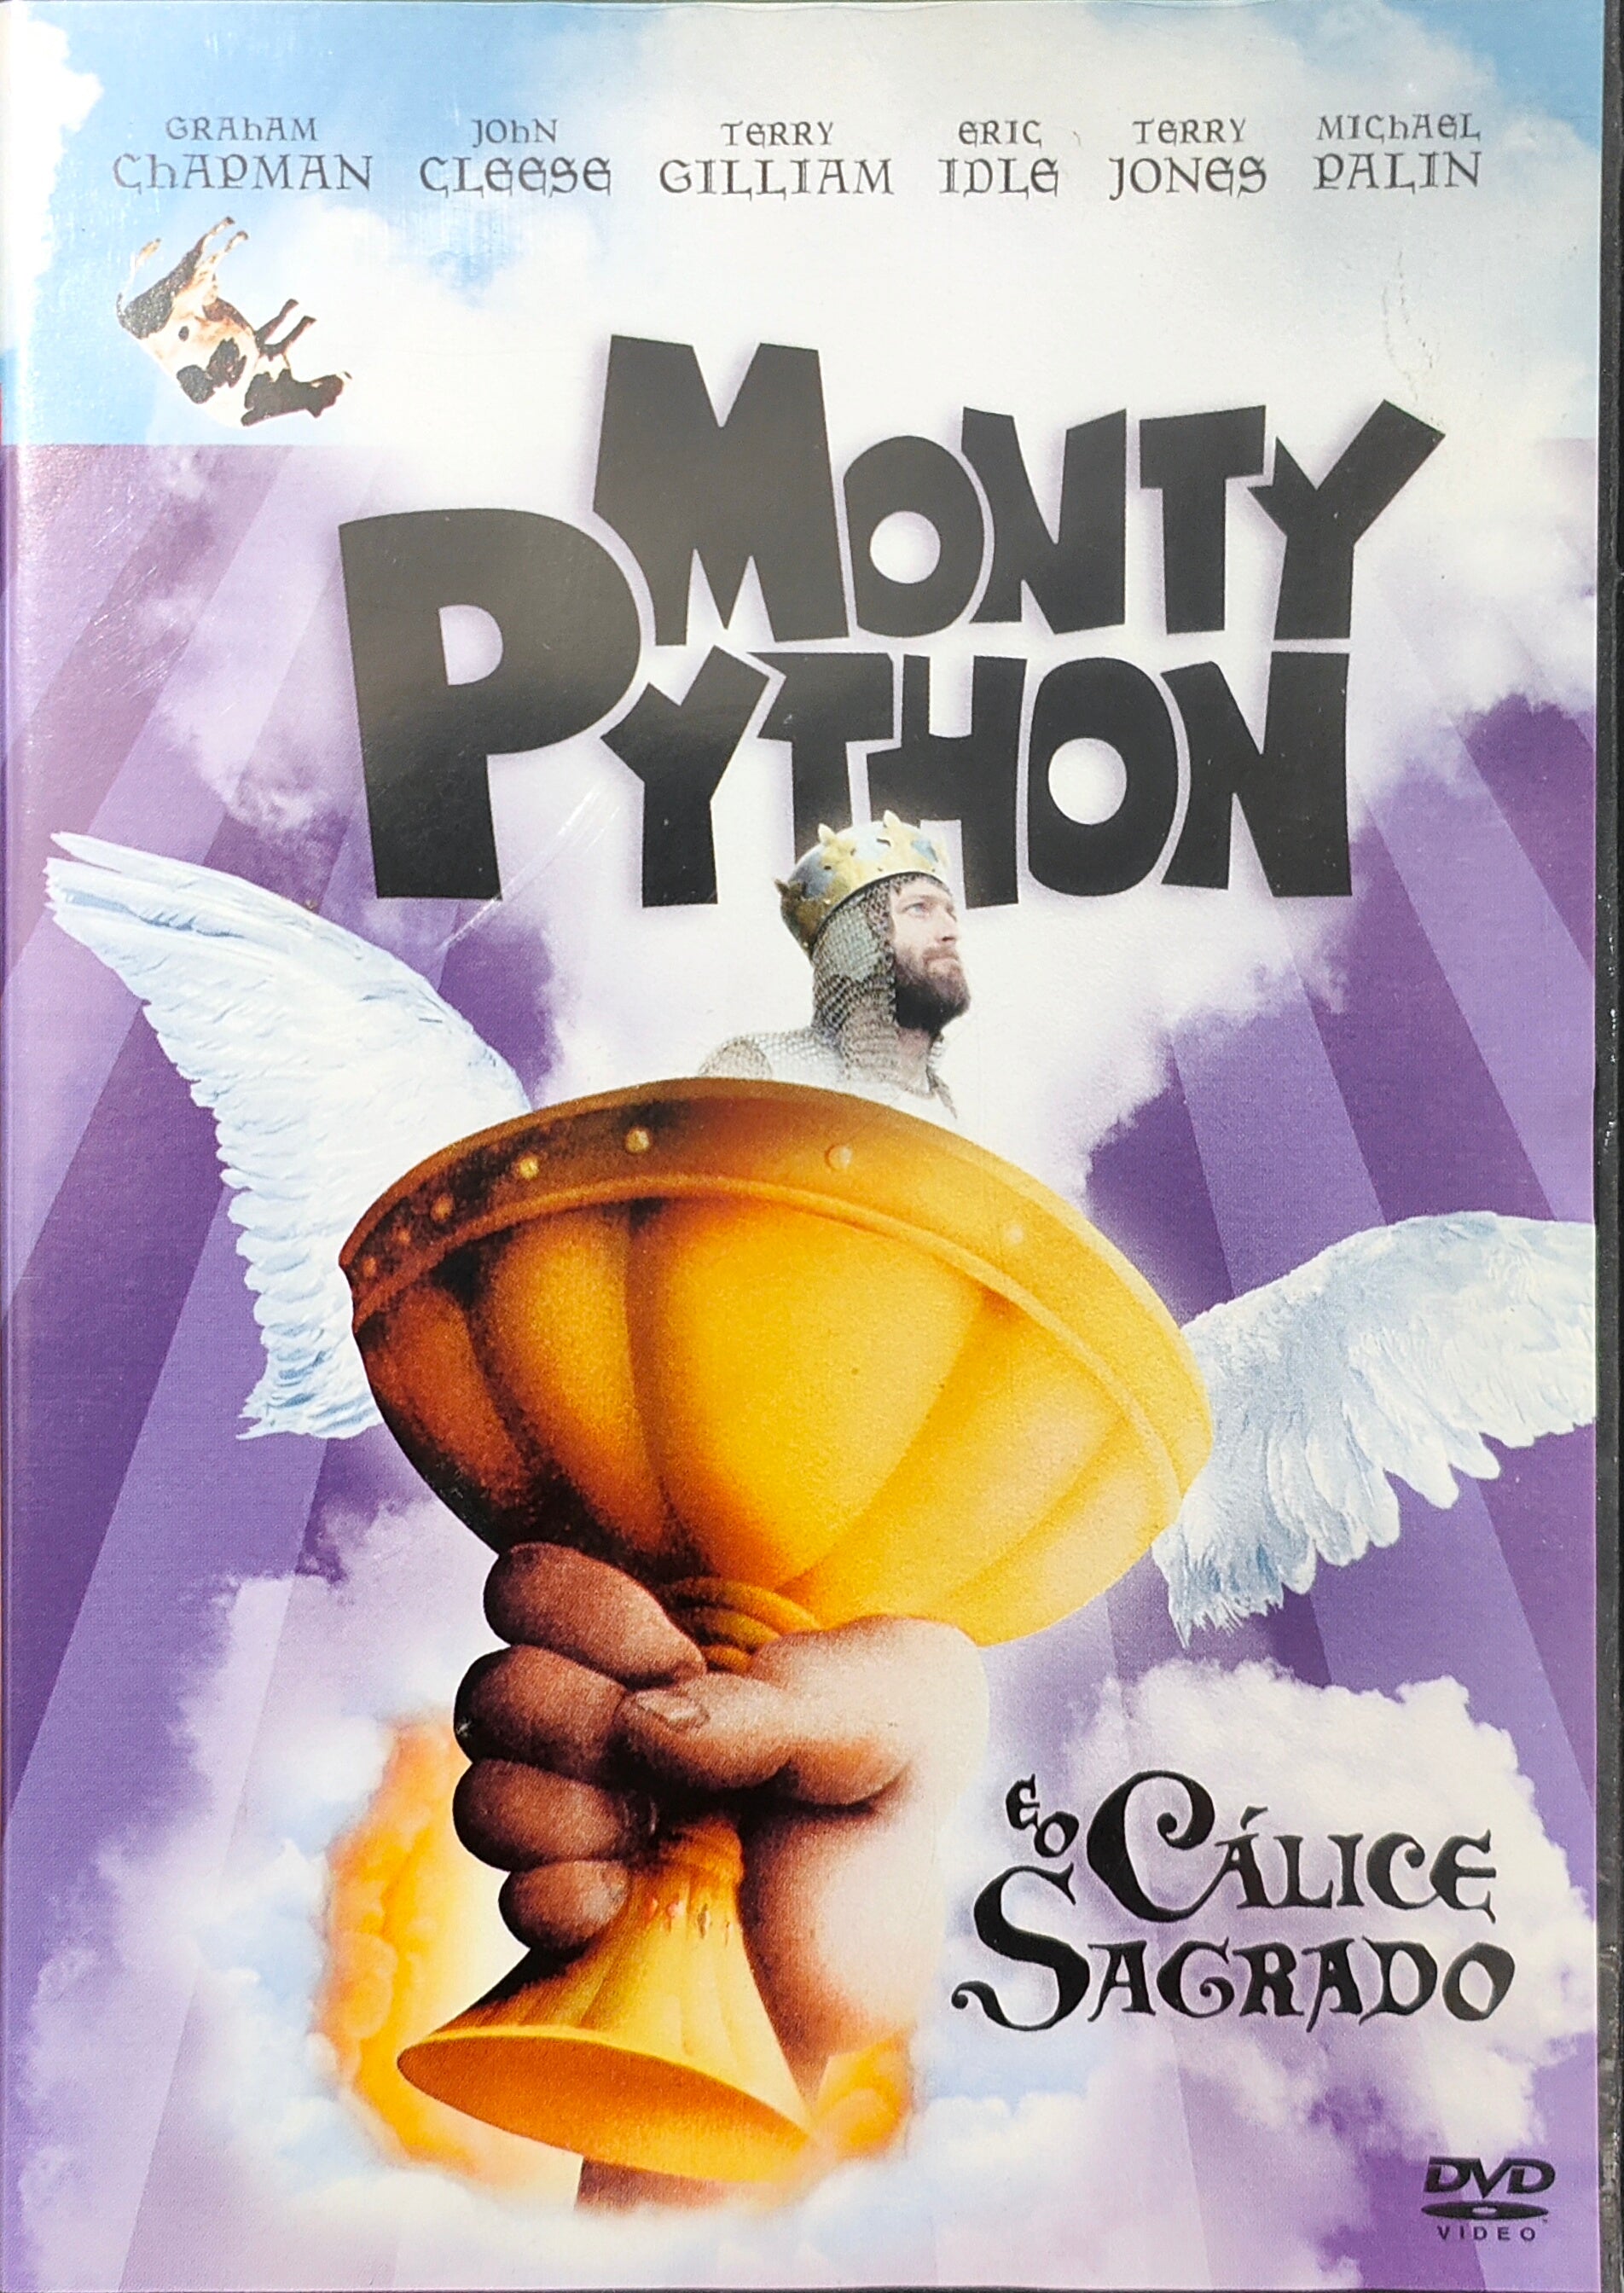 DVD Monty Python e o Cálice Sgrado - Usado